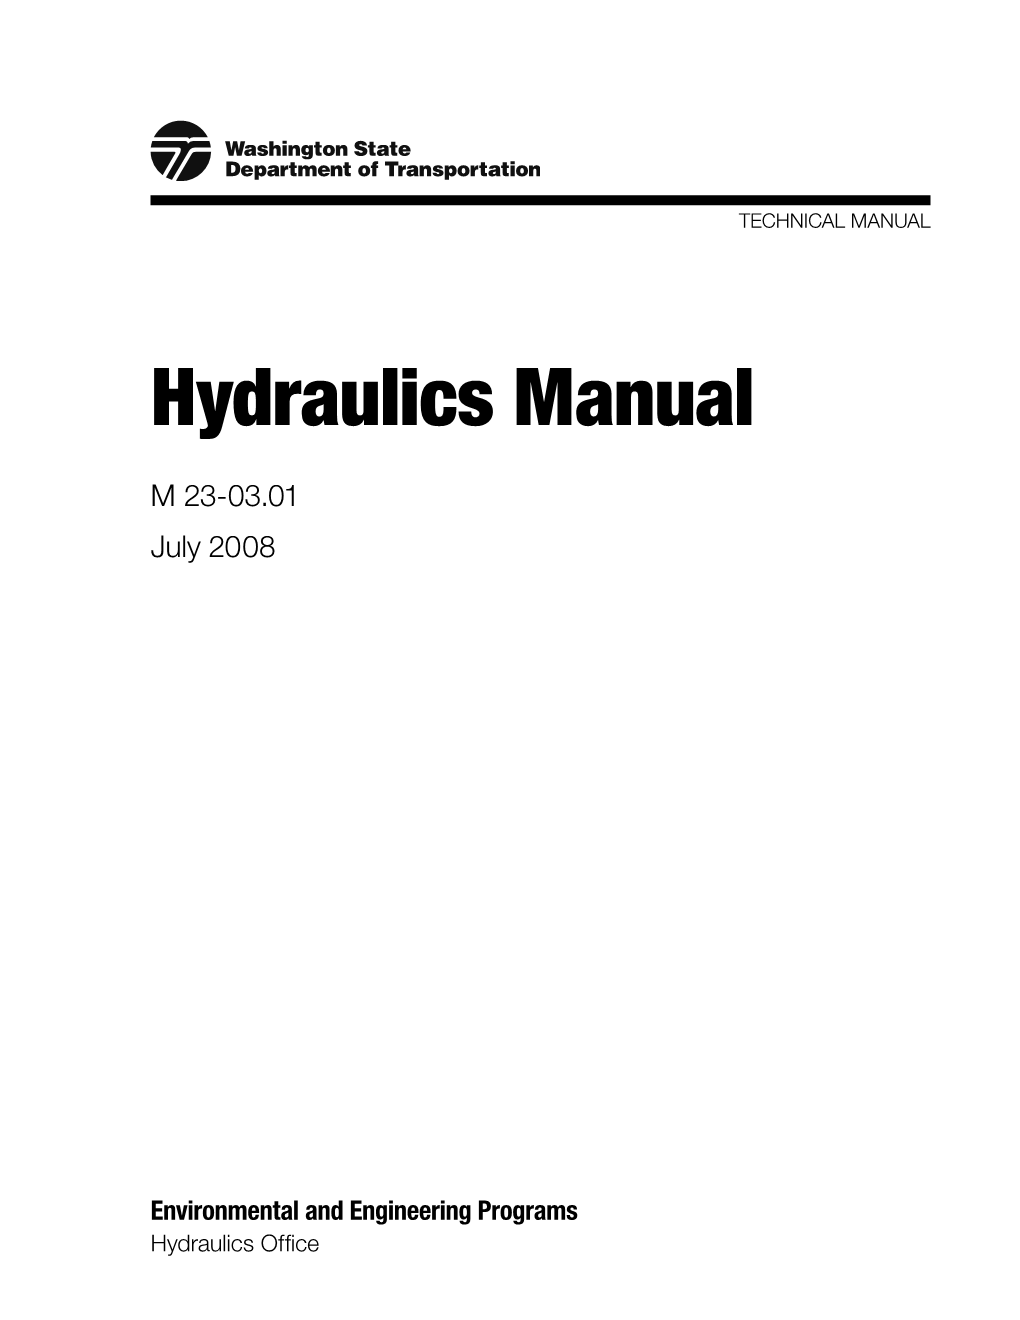 Washington State Department of Transportation: Hydraulics Manual